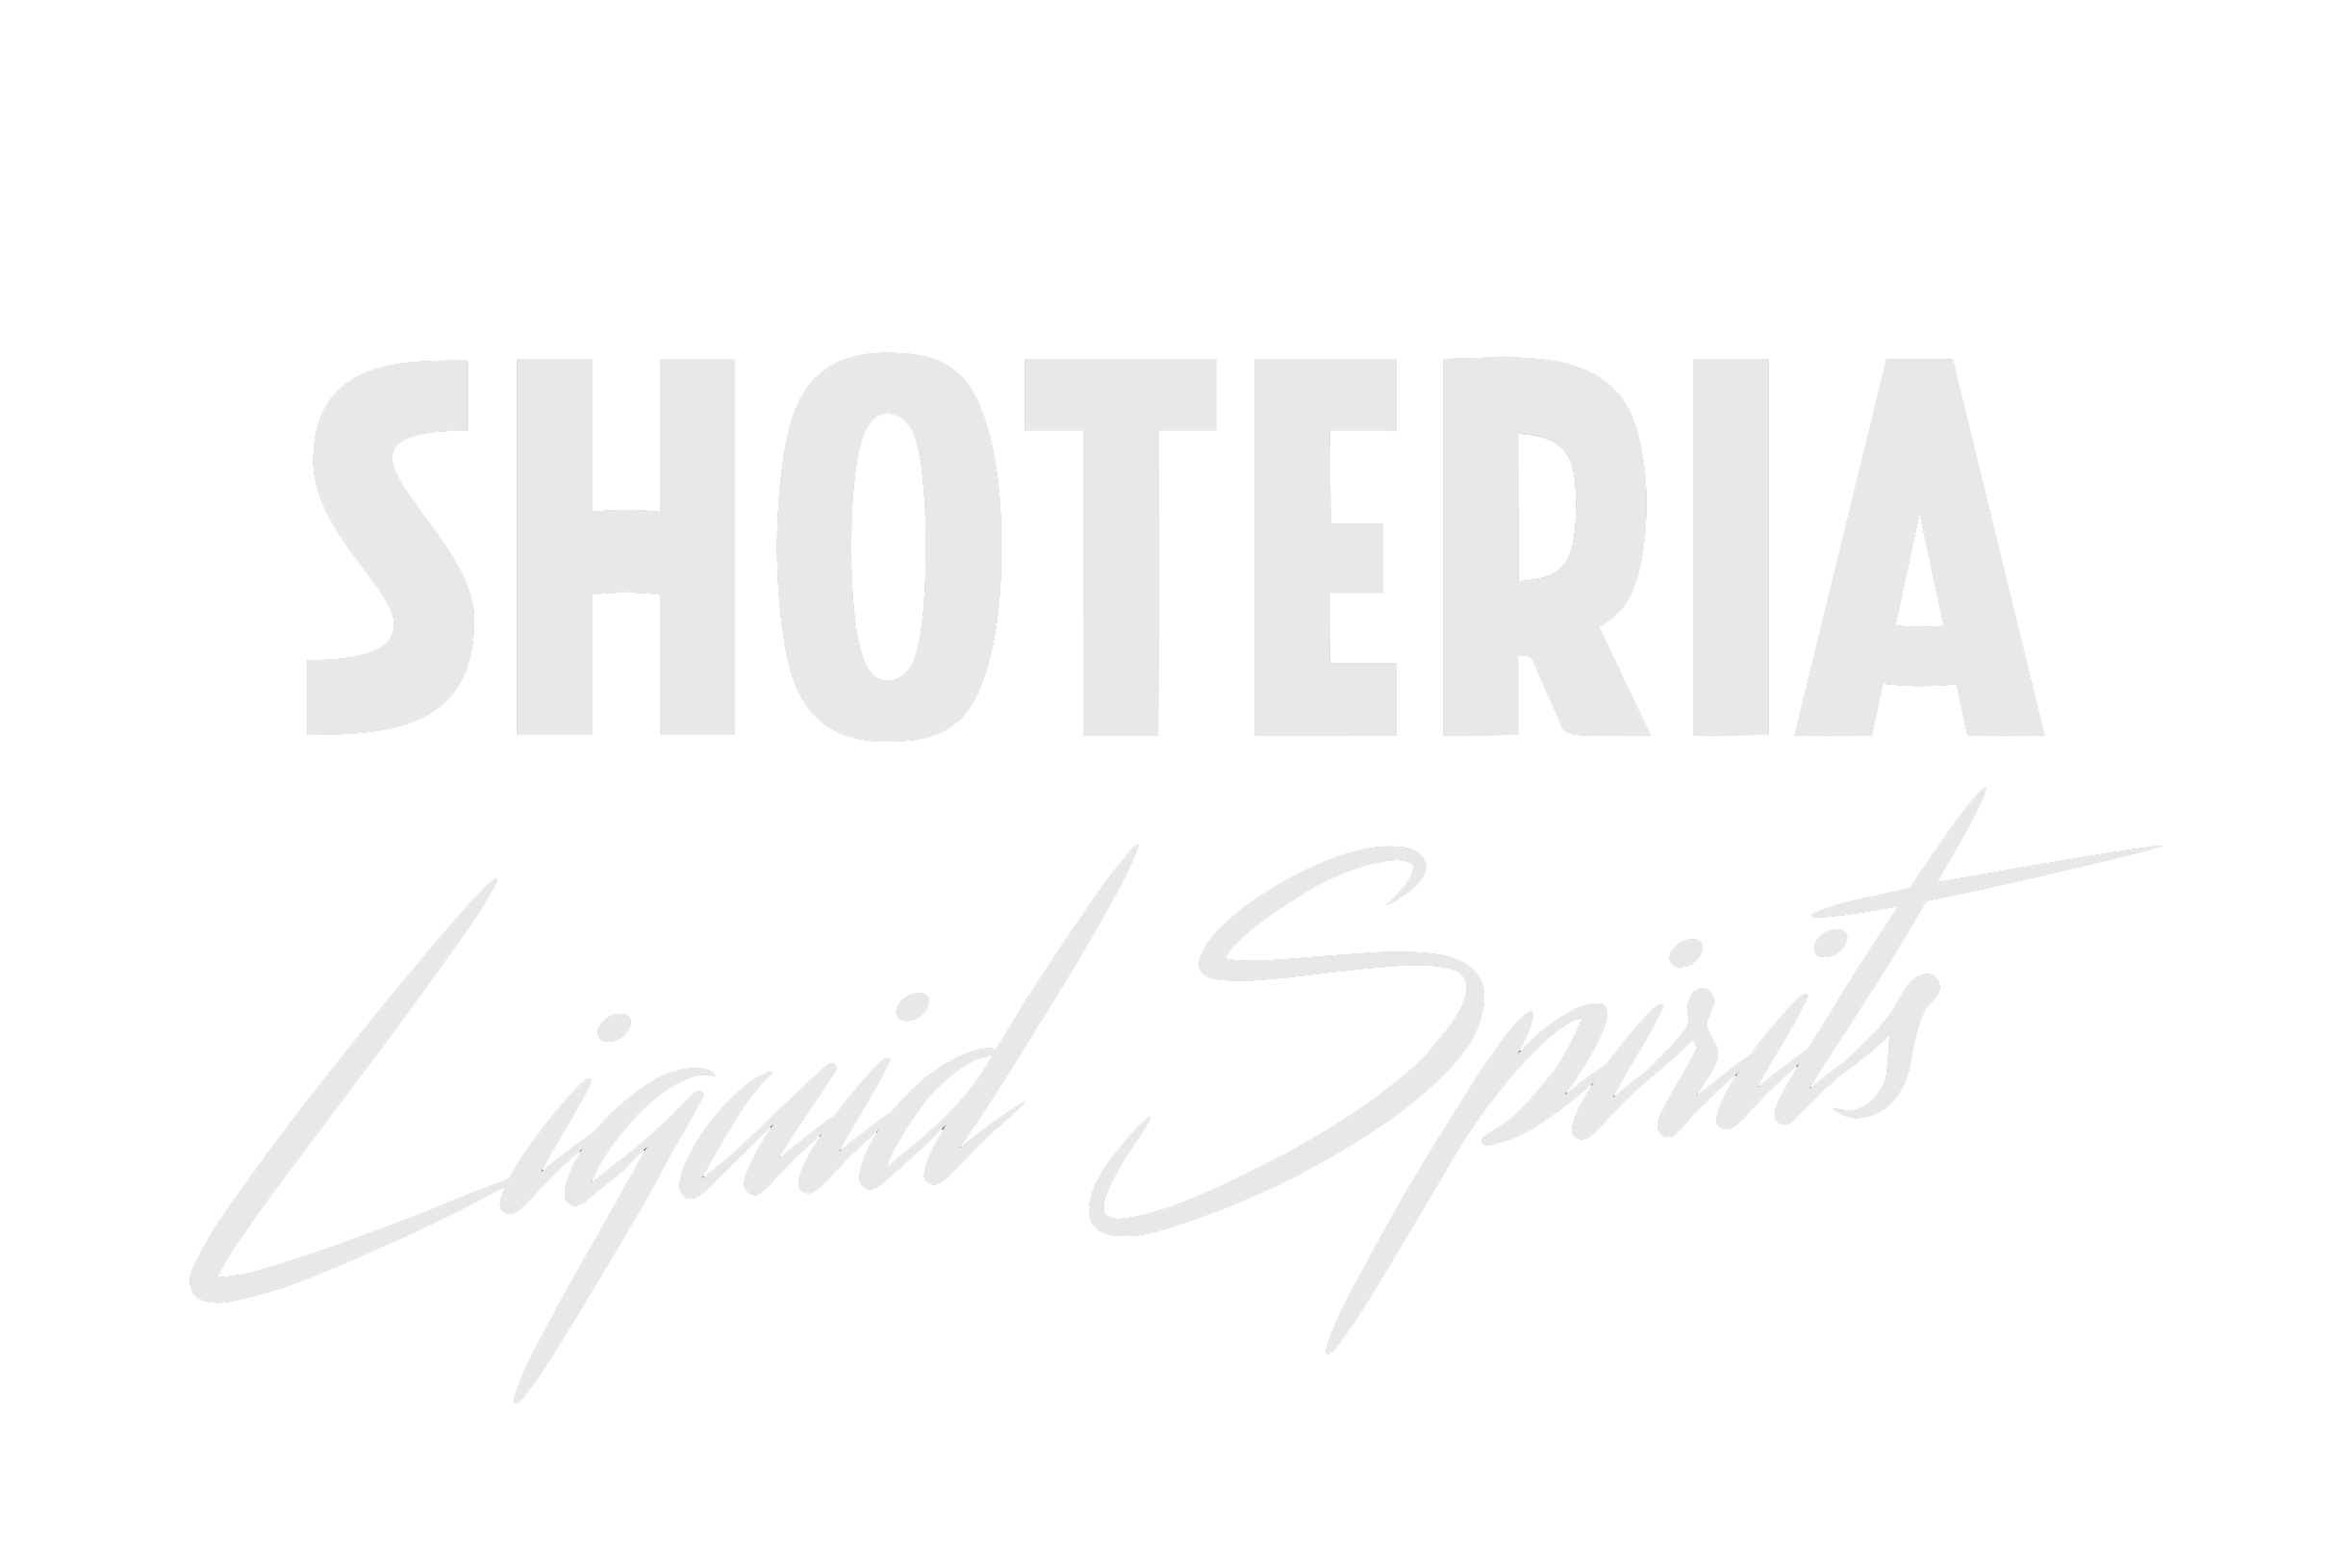 Shoteria Logo-4 pmg